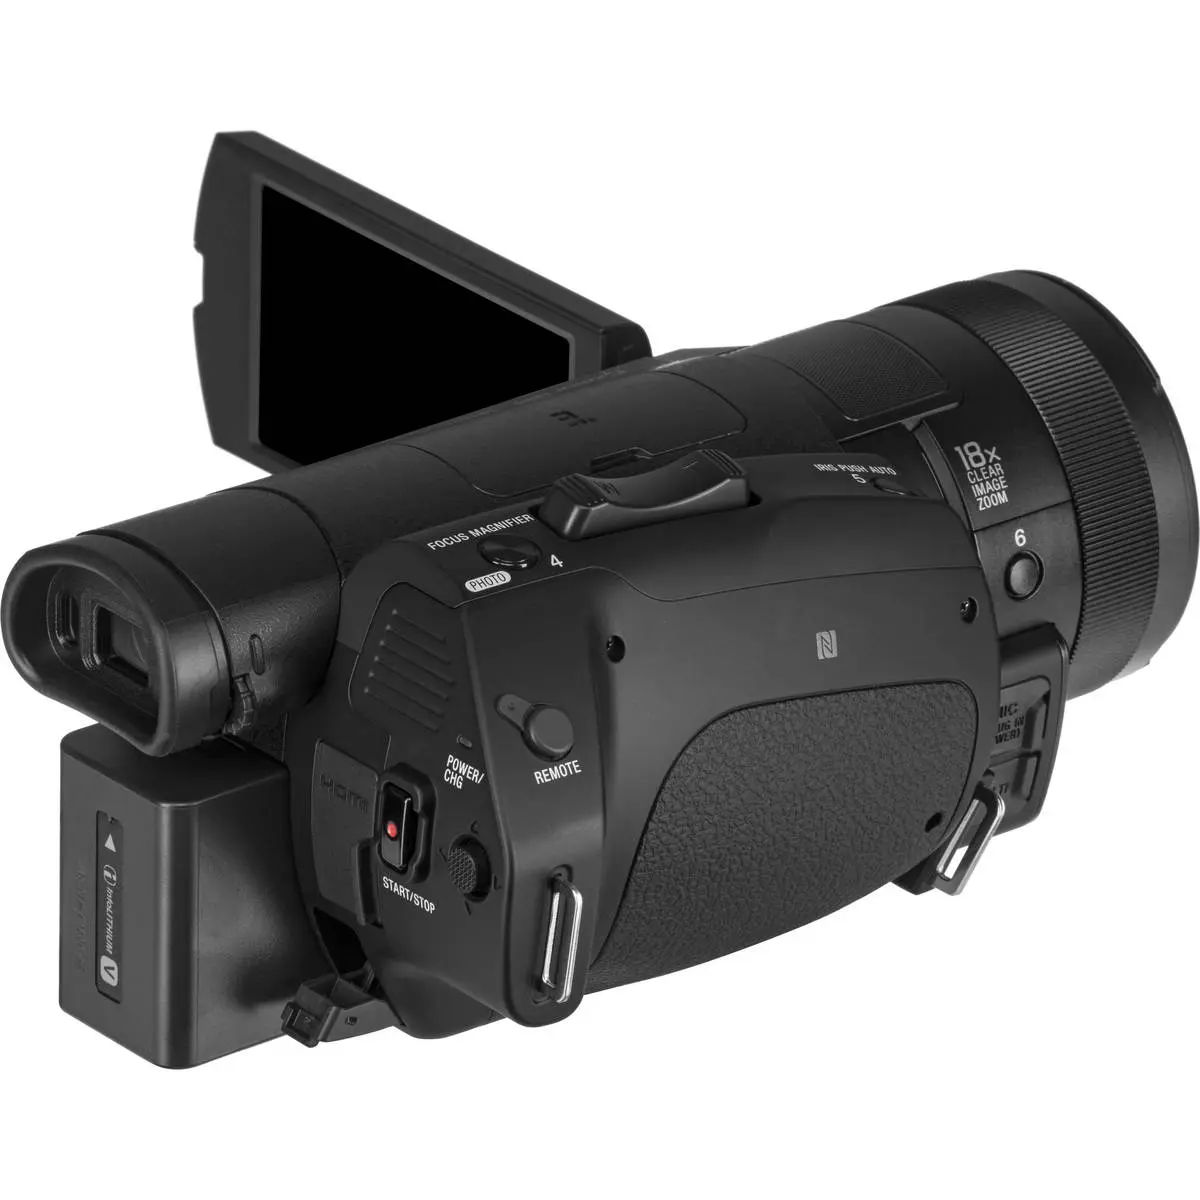 8. Sony FDR-AX700 4K Camcorder PAL